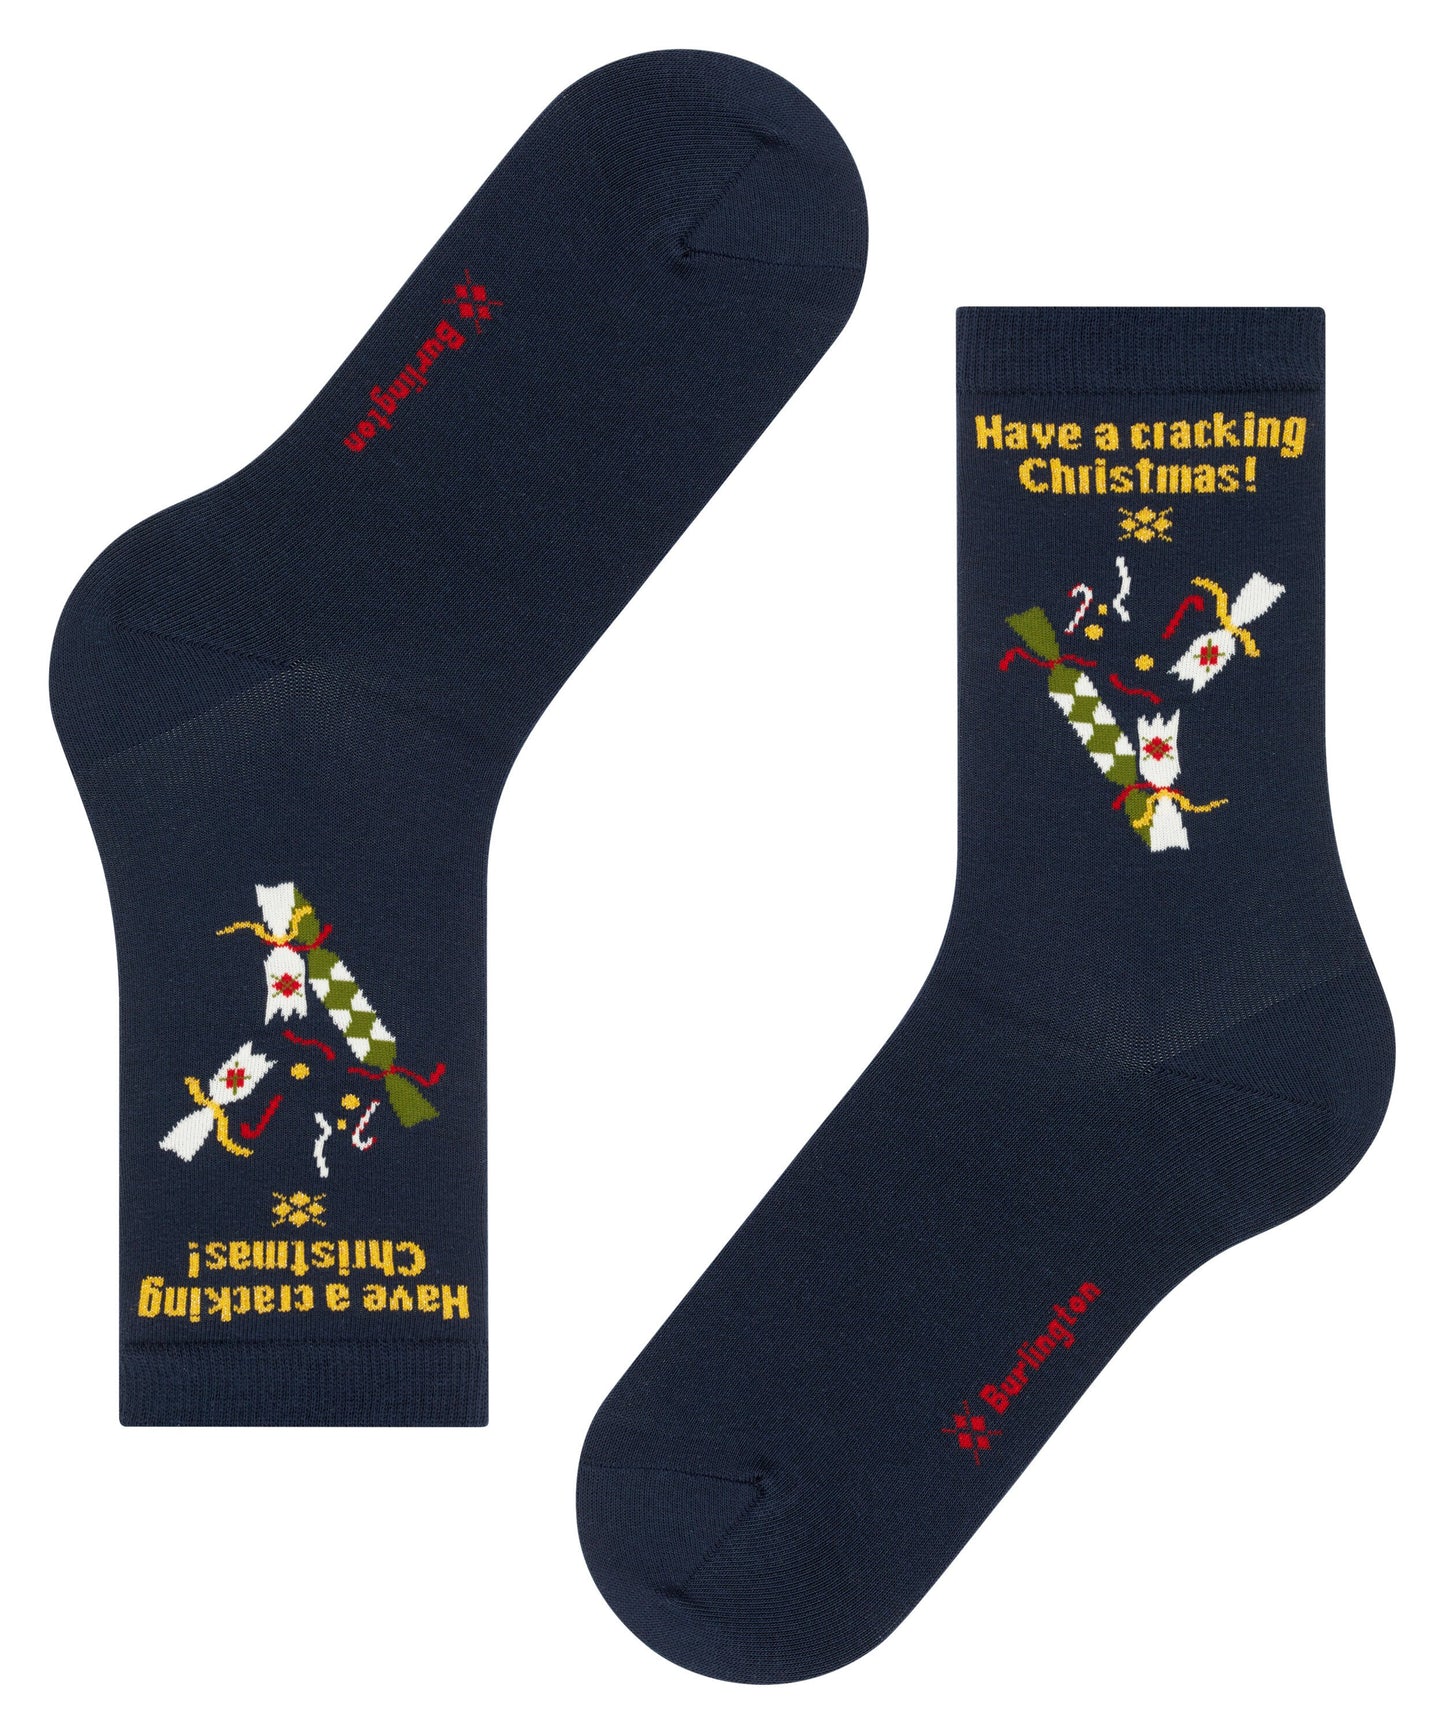 Burlington X-Mas Cracker Damen Socken (Marine)